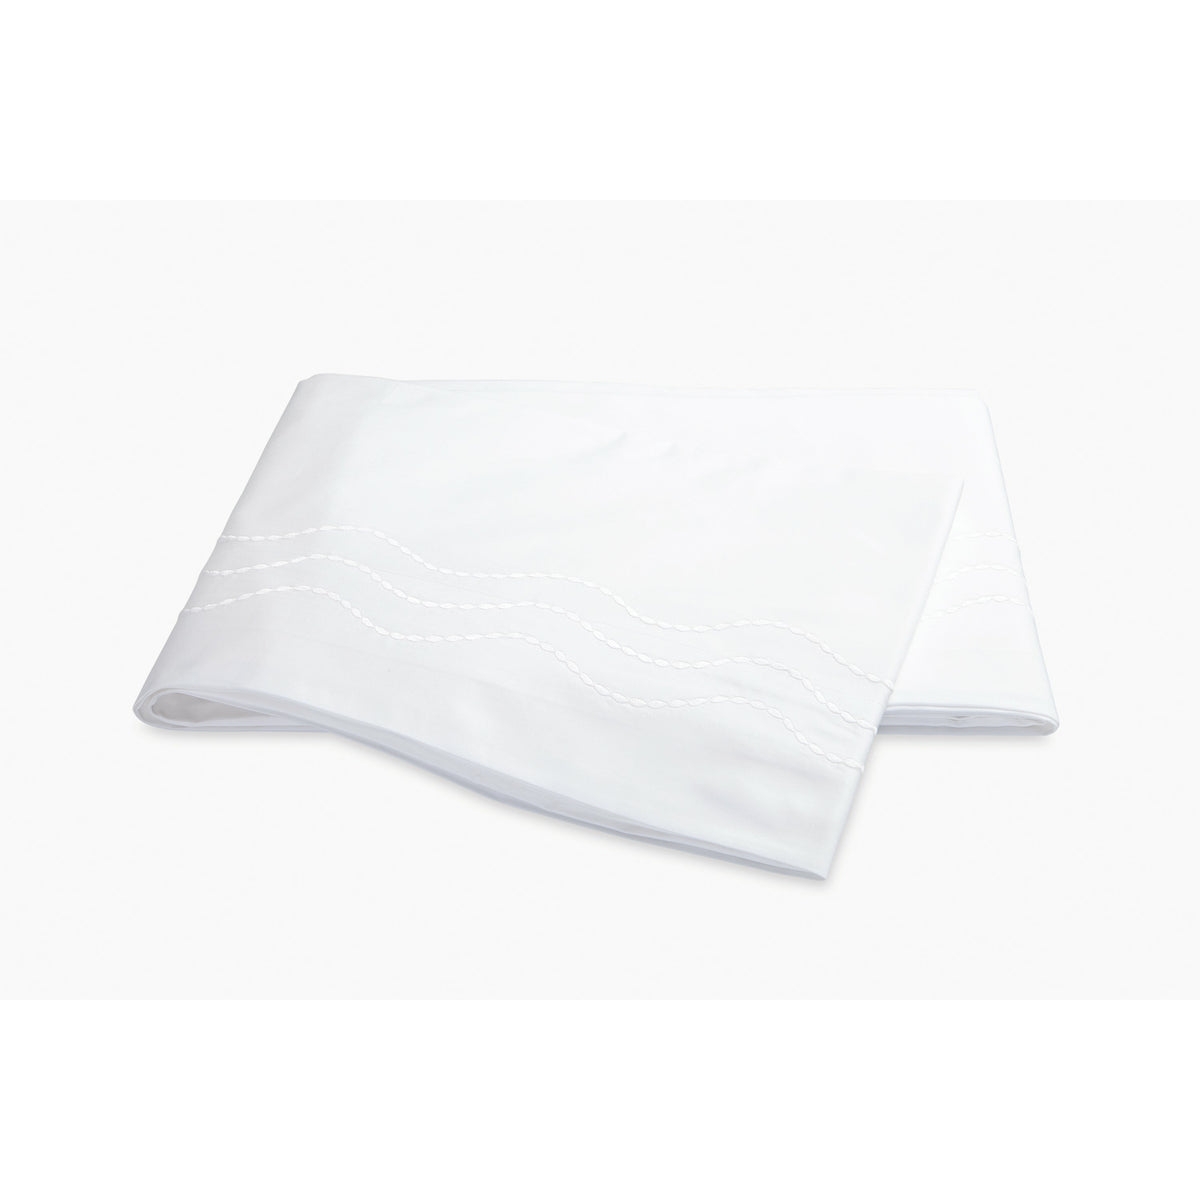 Matouk Serena Bedding Collection Flat Sheet White Fine Linens